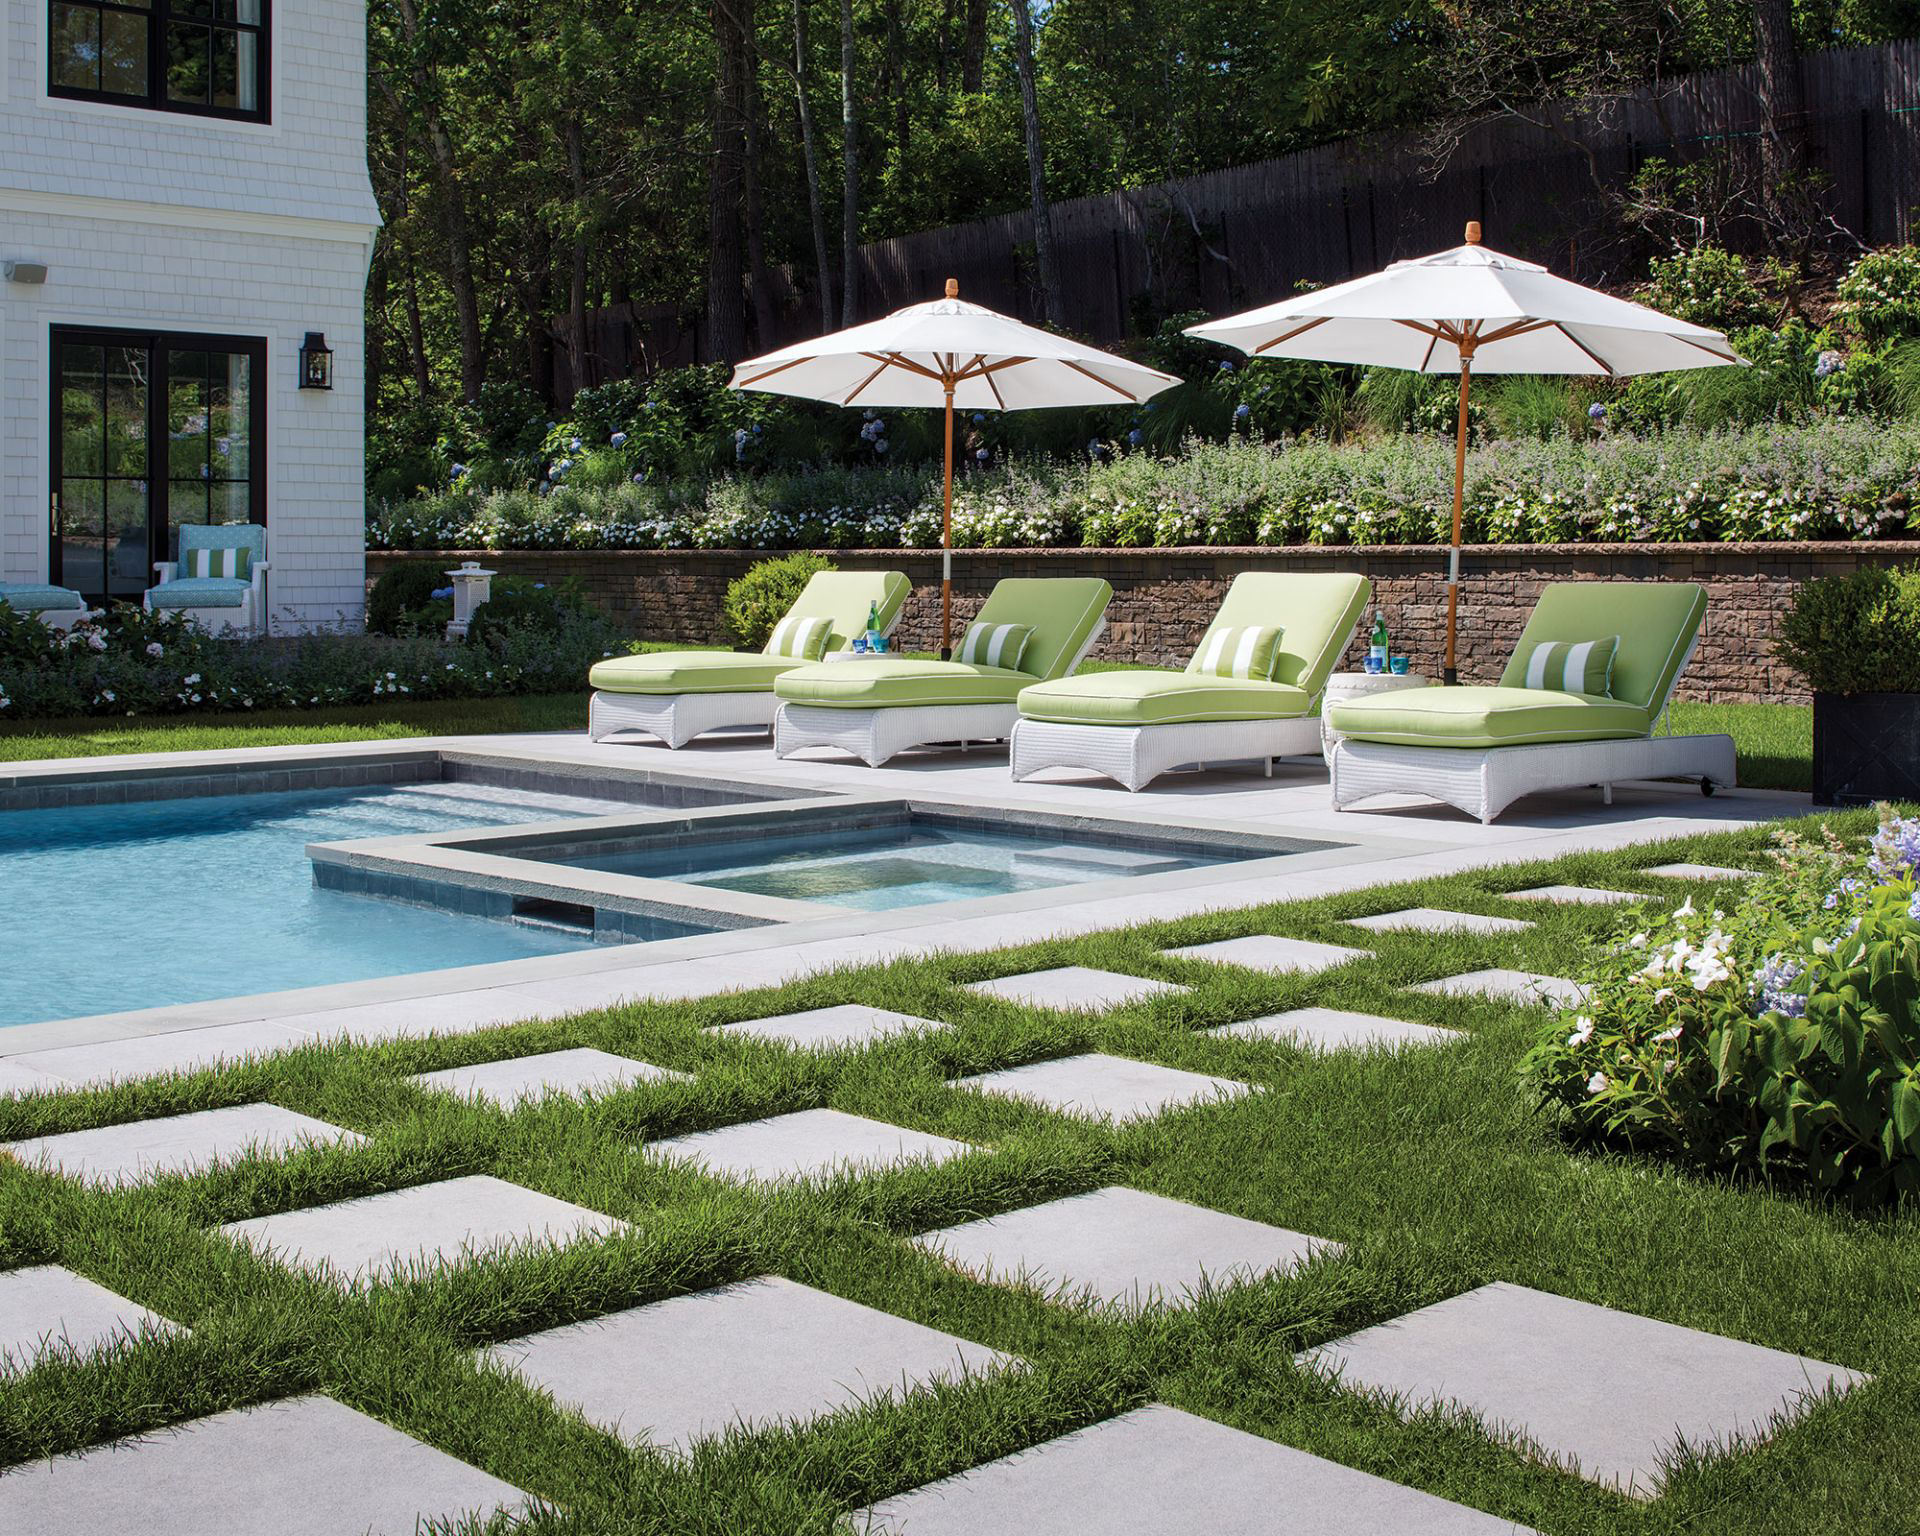 Pool patio ideas – 15 ways to create a fabulous poolscape